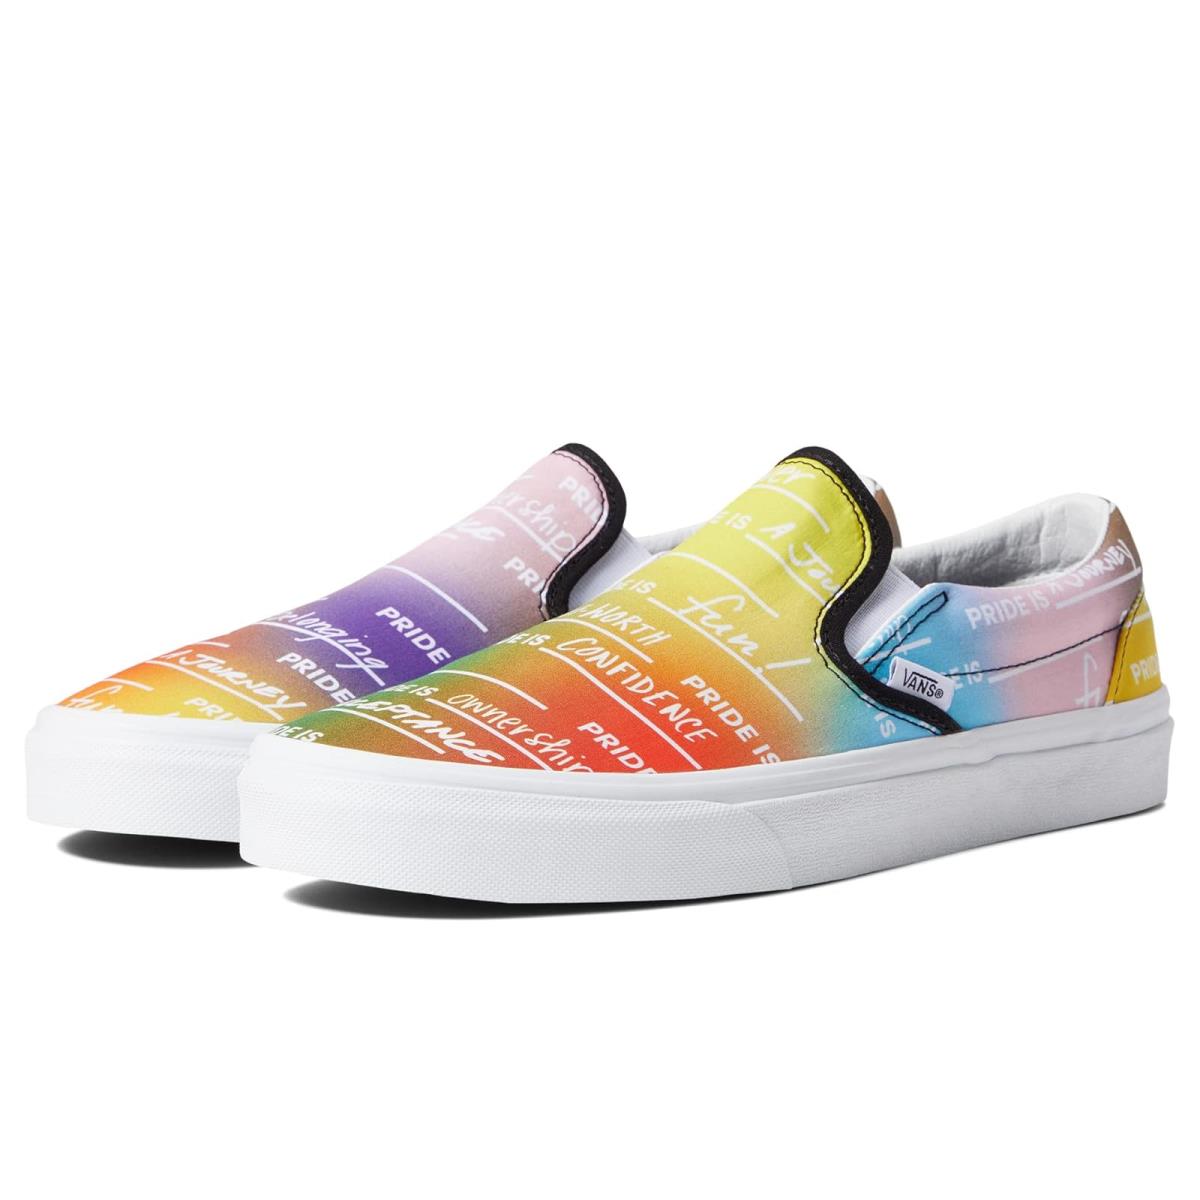 Unisex Sneakers Athletic Shoes Vans Vans X Pride Sneaker Collection (Pride) Rainbow/True White (Classic Slip-On)